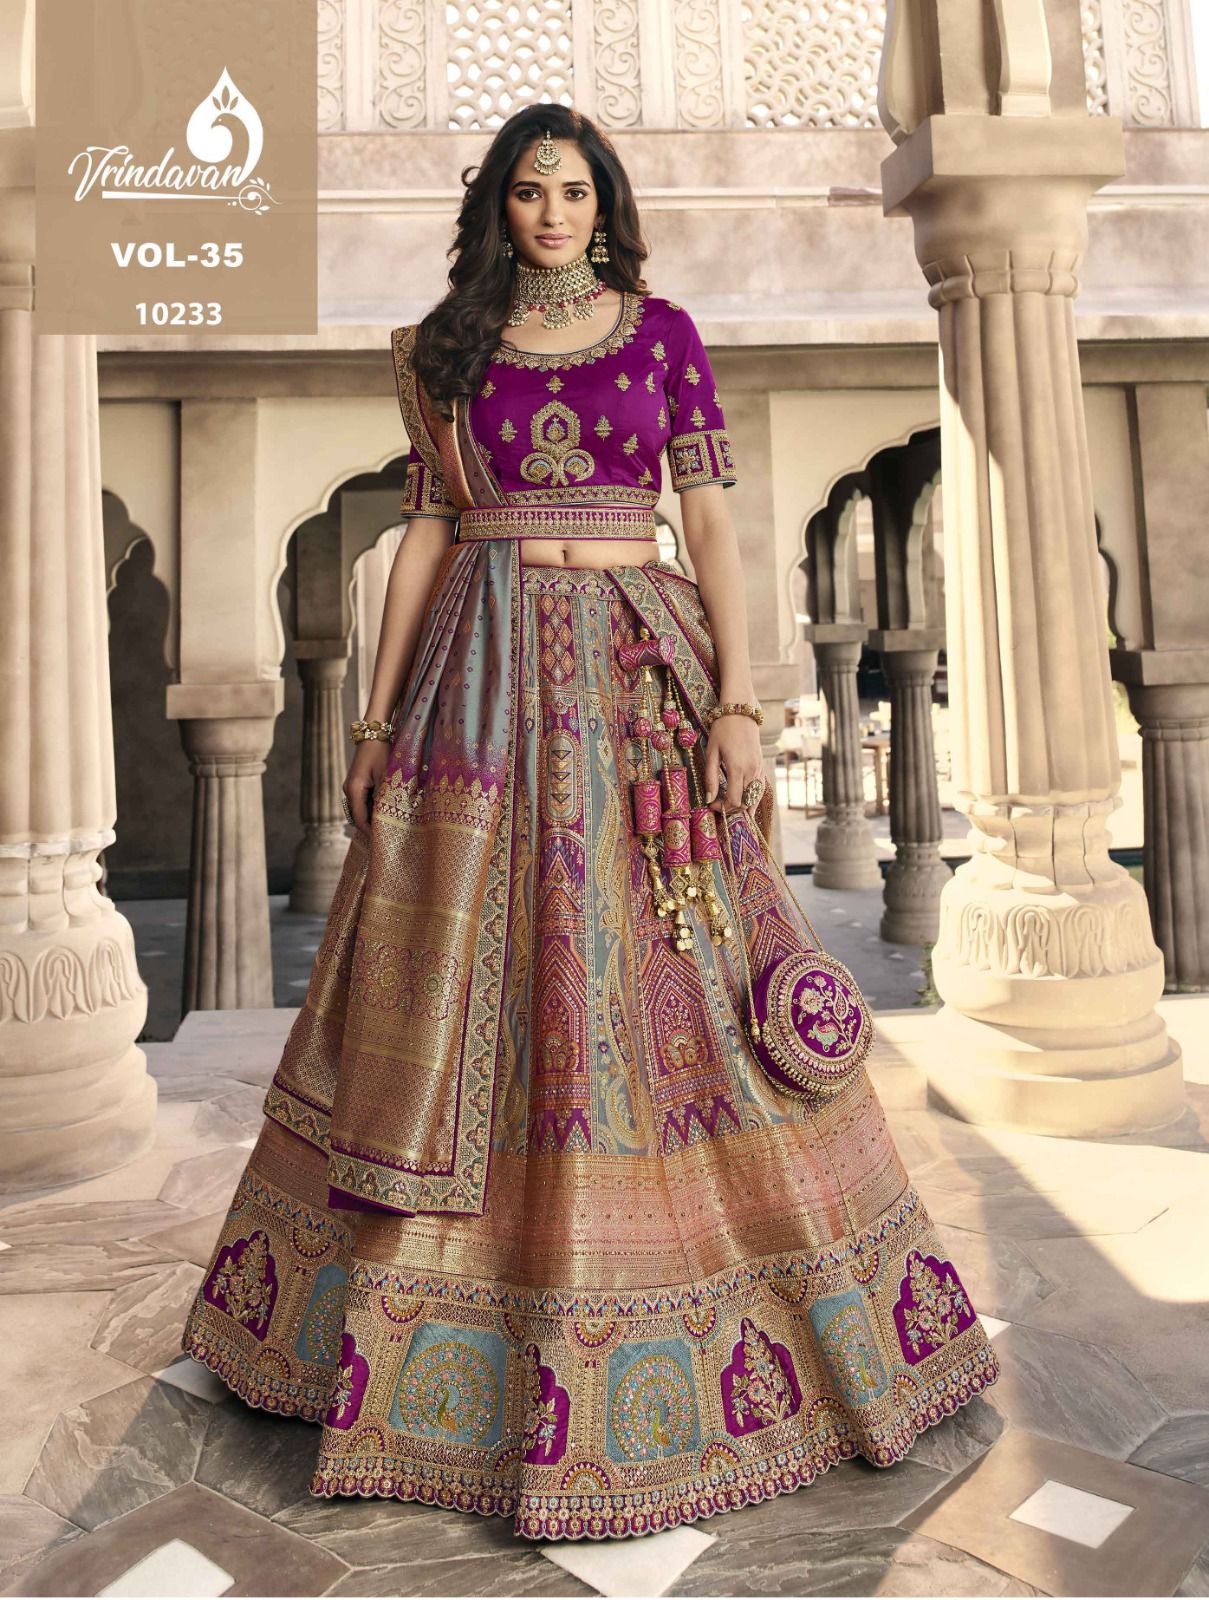 Royal Vrindavan Banarasi Silk Lehenga Vol 35 Dno.10233 Anant Tex Exports Private Limited